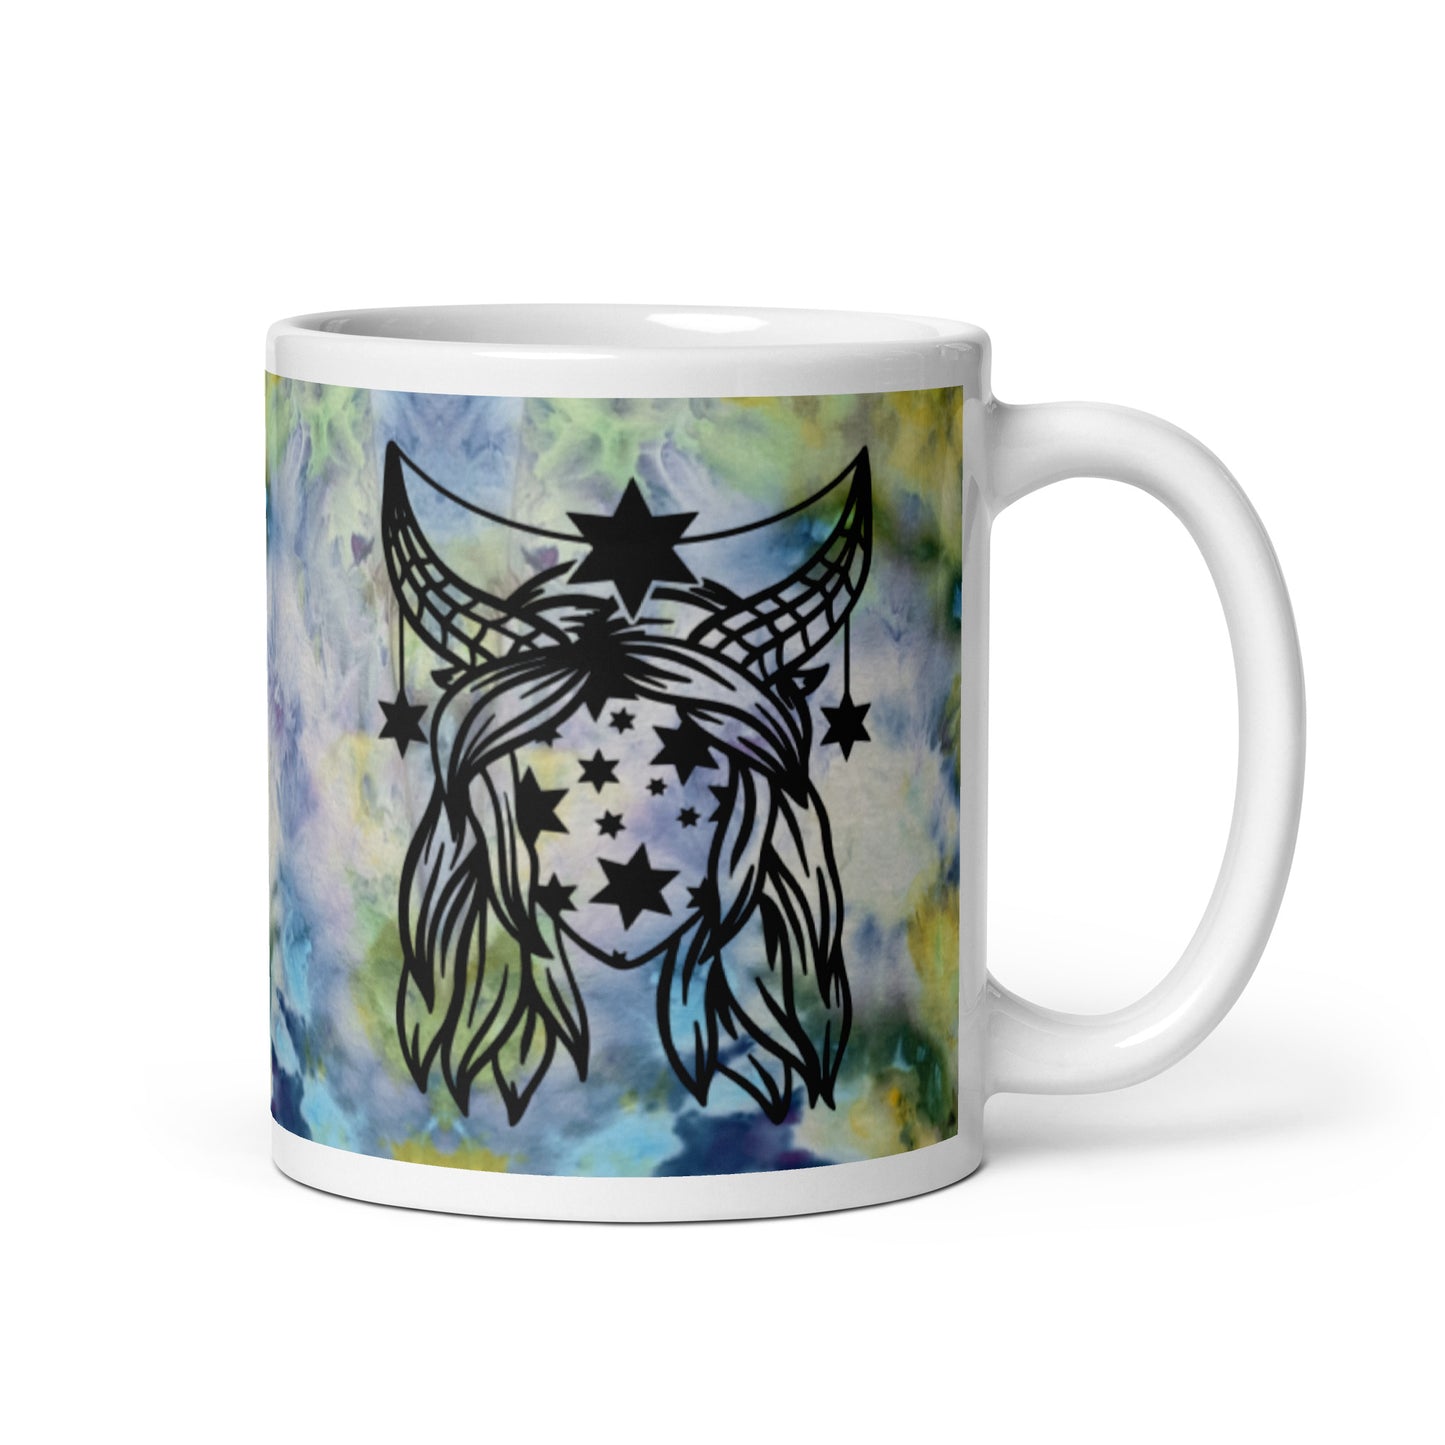 Magical Goddess with Horns Mug